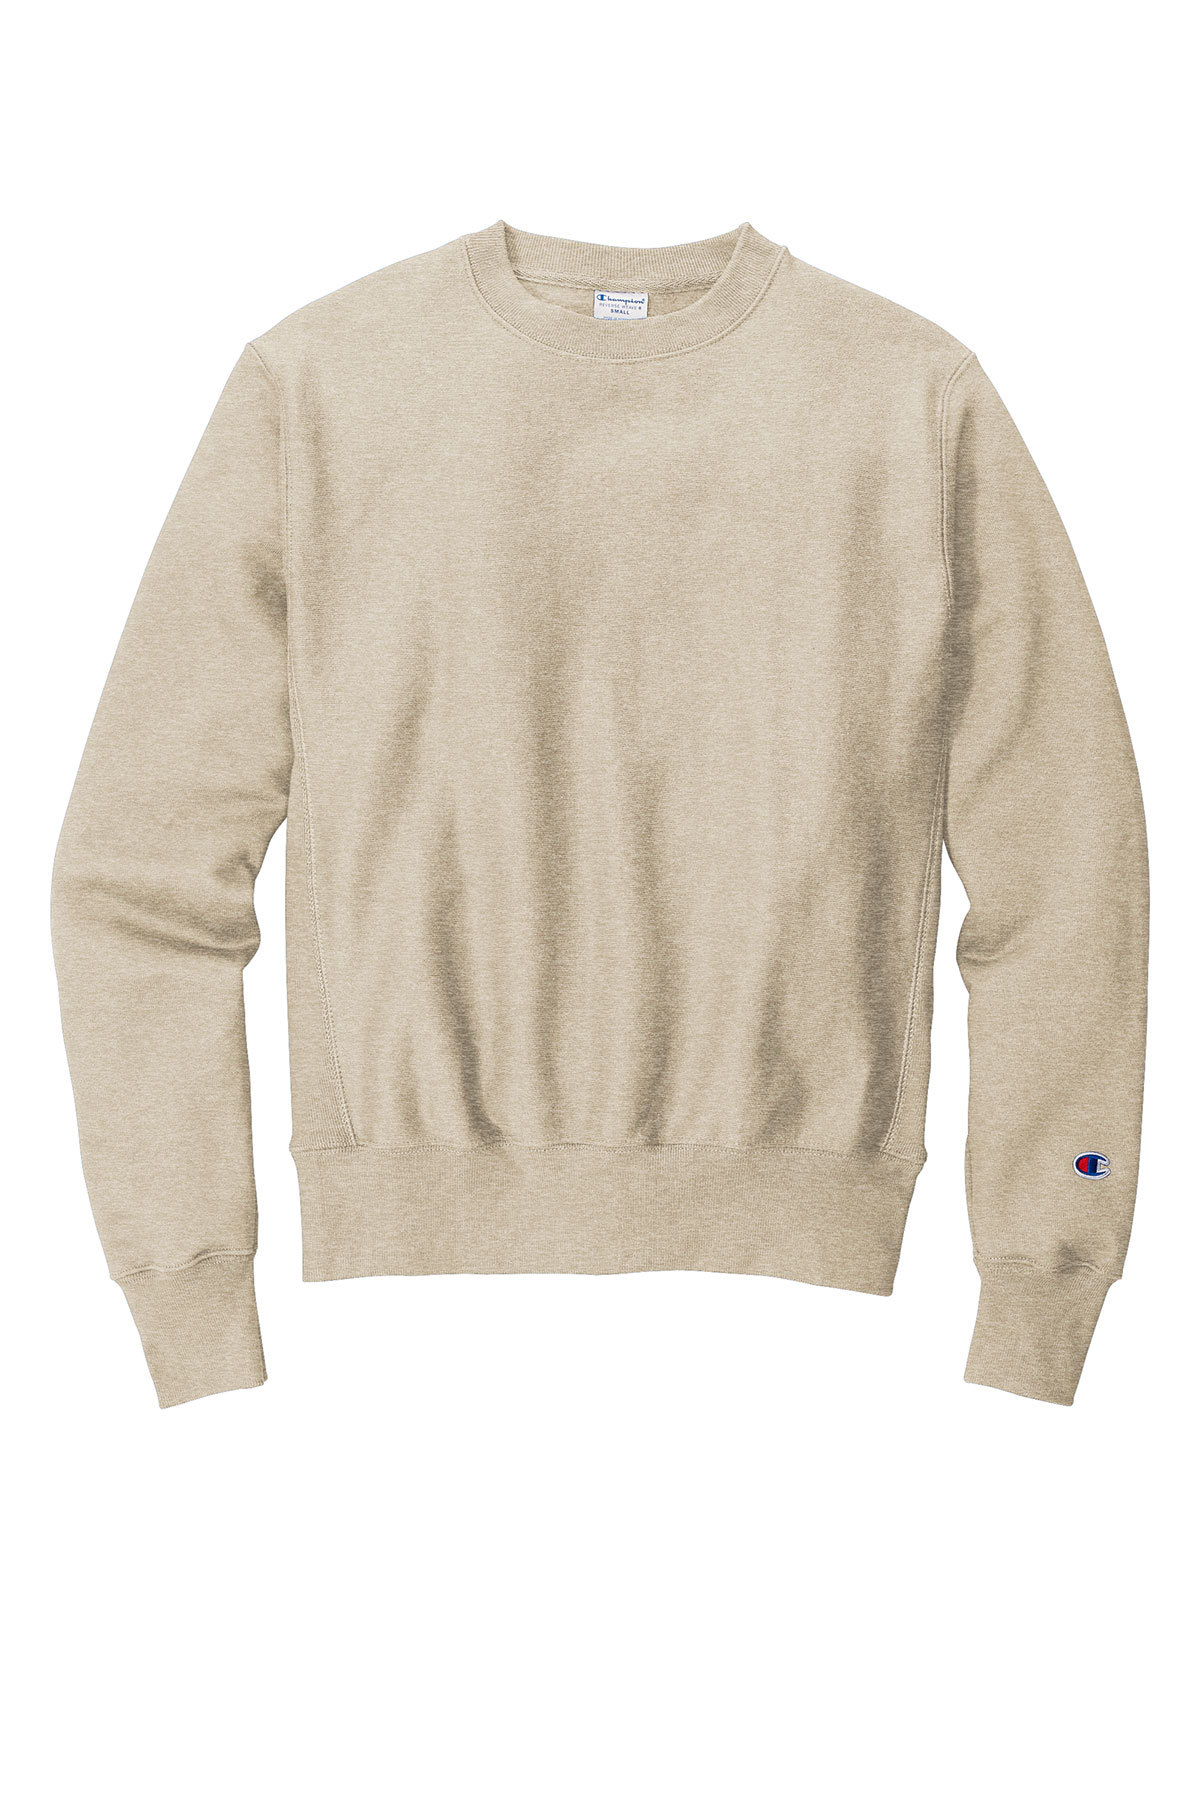 CC Products LLC Champion Crewneck Sweatshirt - Moma Edition by Champion | Medium | Oatmeal